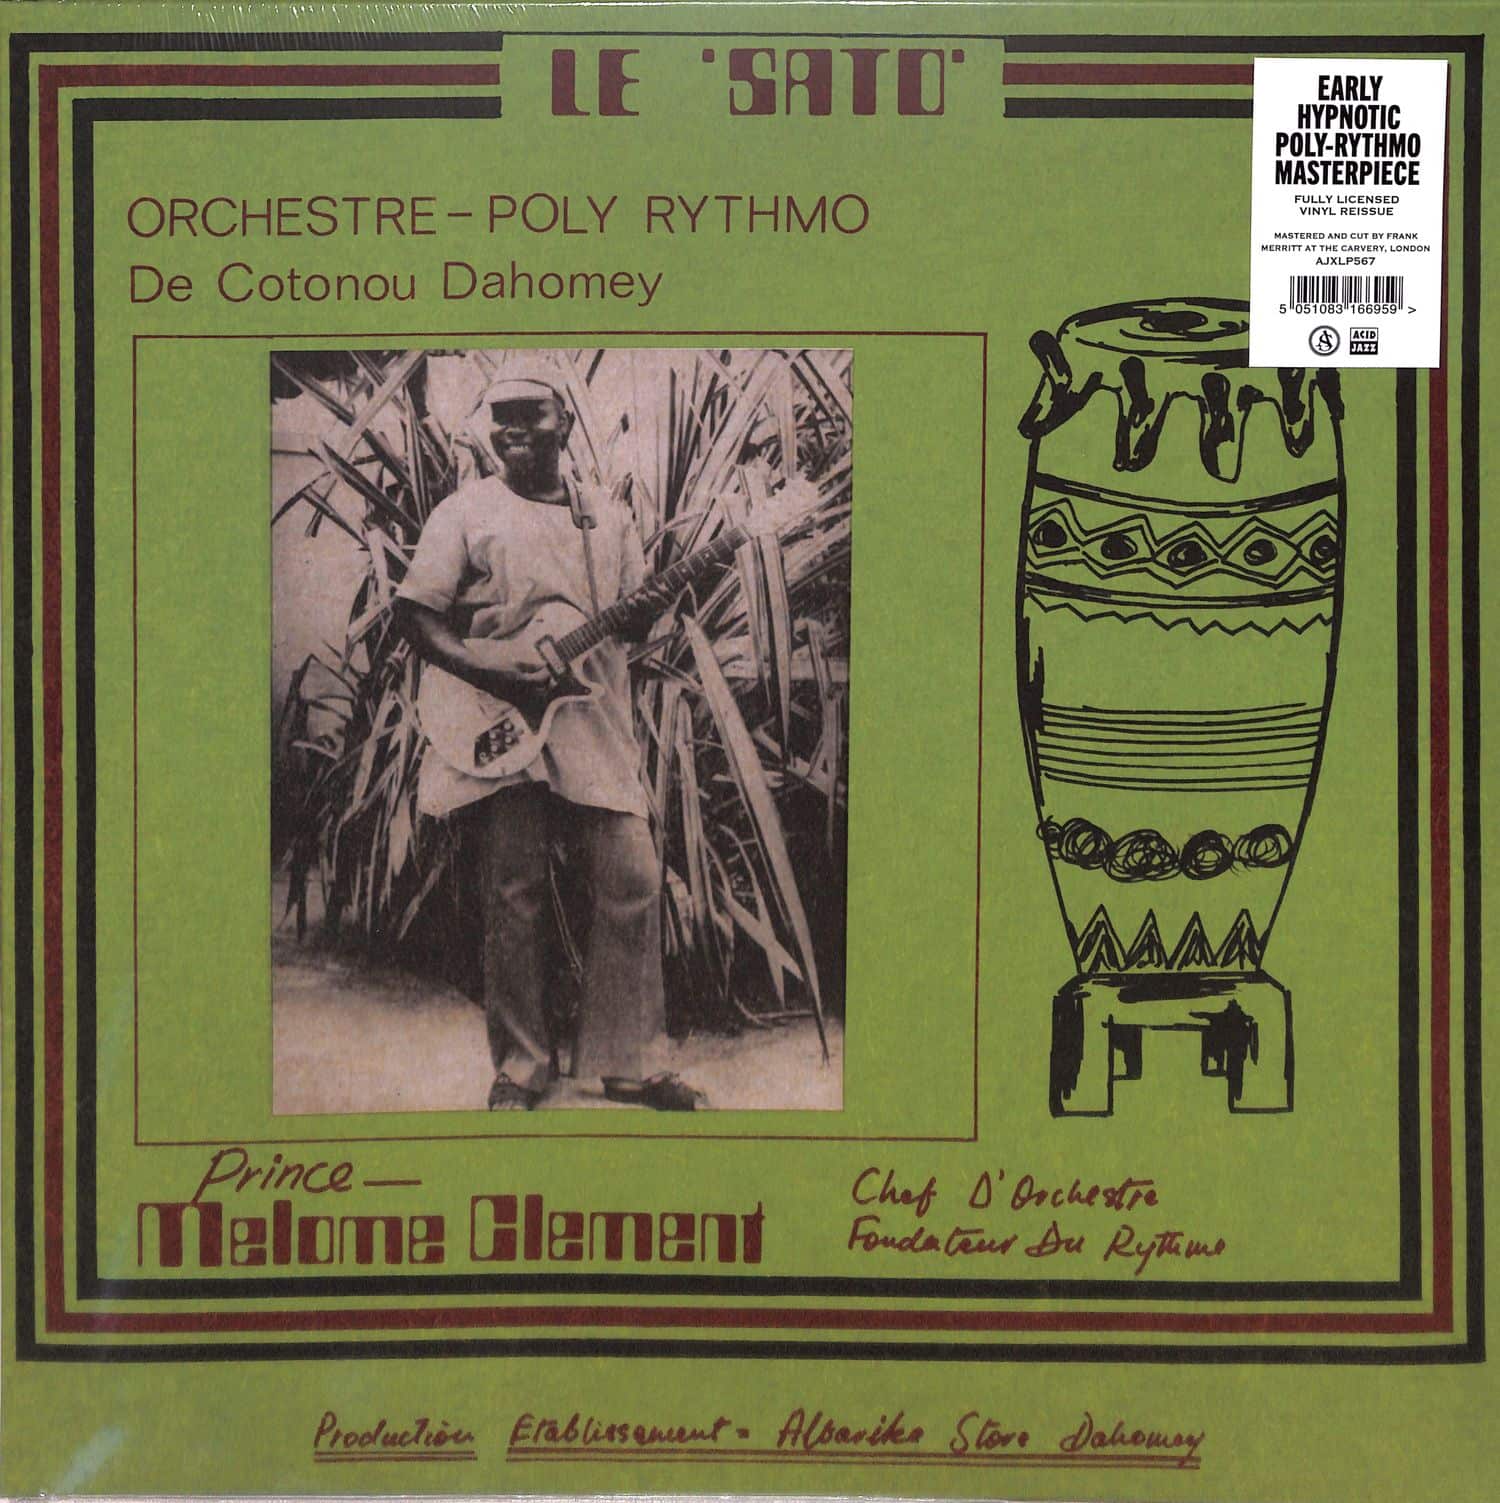 Orchestre Poly-Rythmo De Cotonou Dahomey - LE SATO 